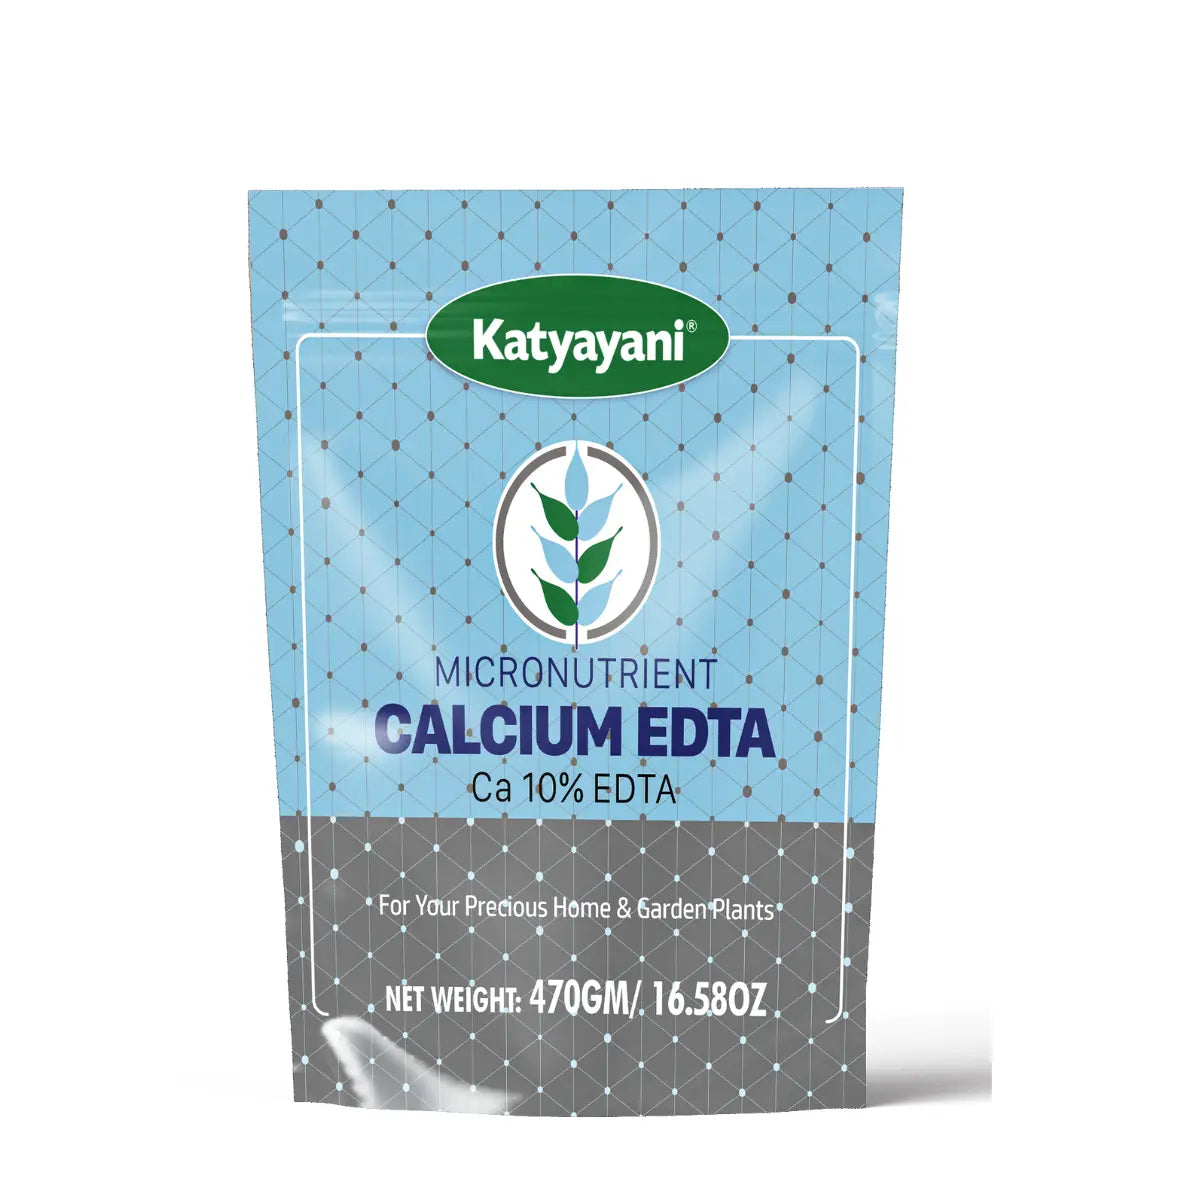 Katyayani Calcium 10% EDTA Fertilizers